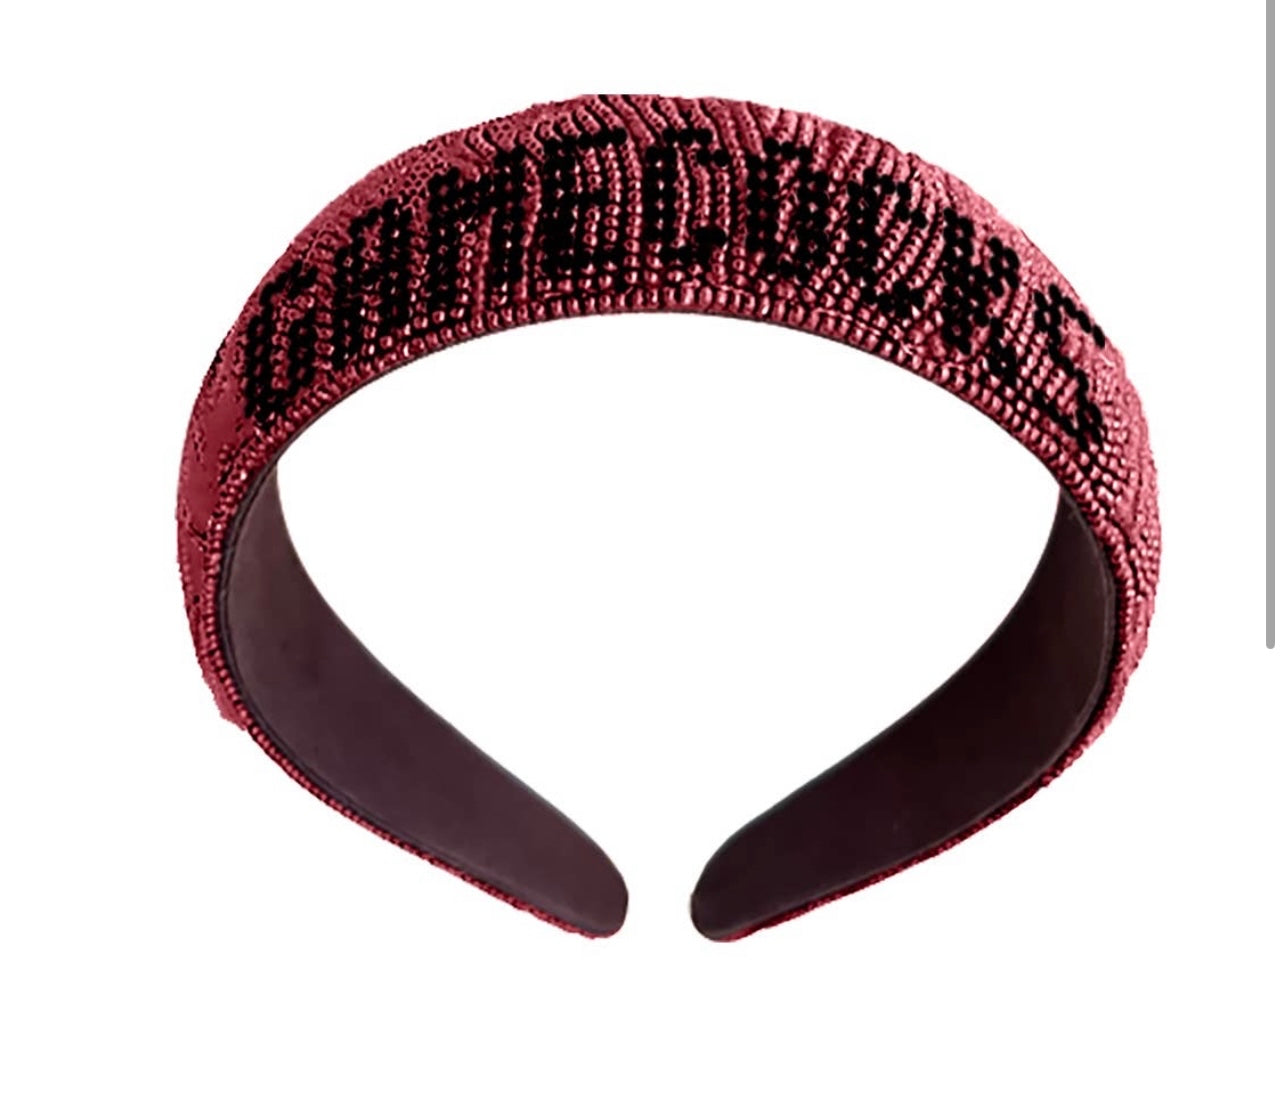 Garnet and black "Gamecocks" beaded headband.